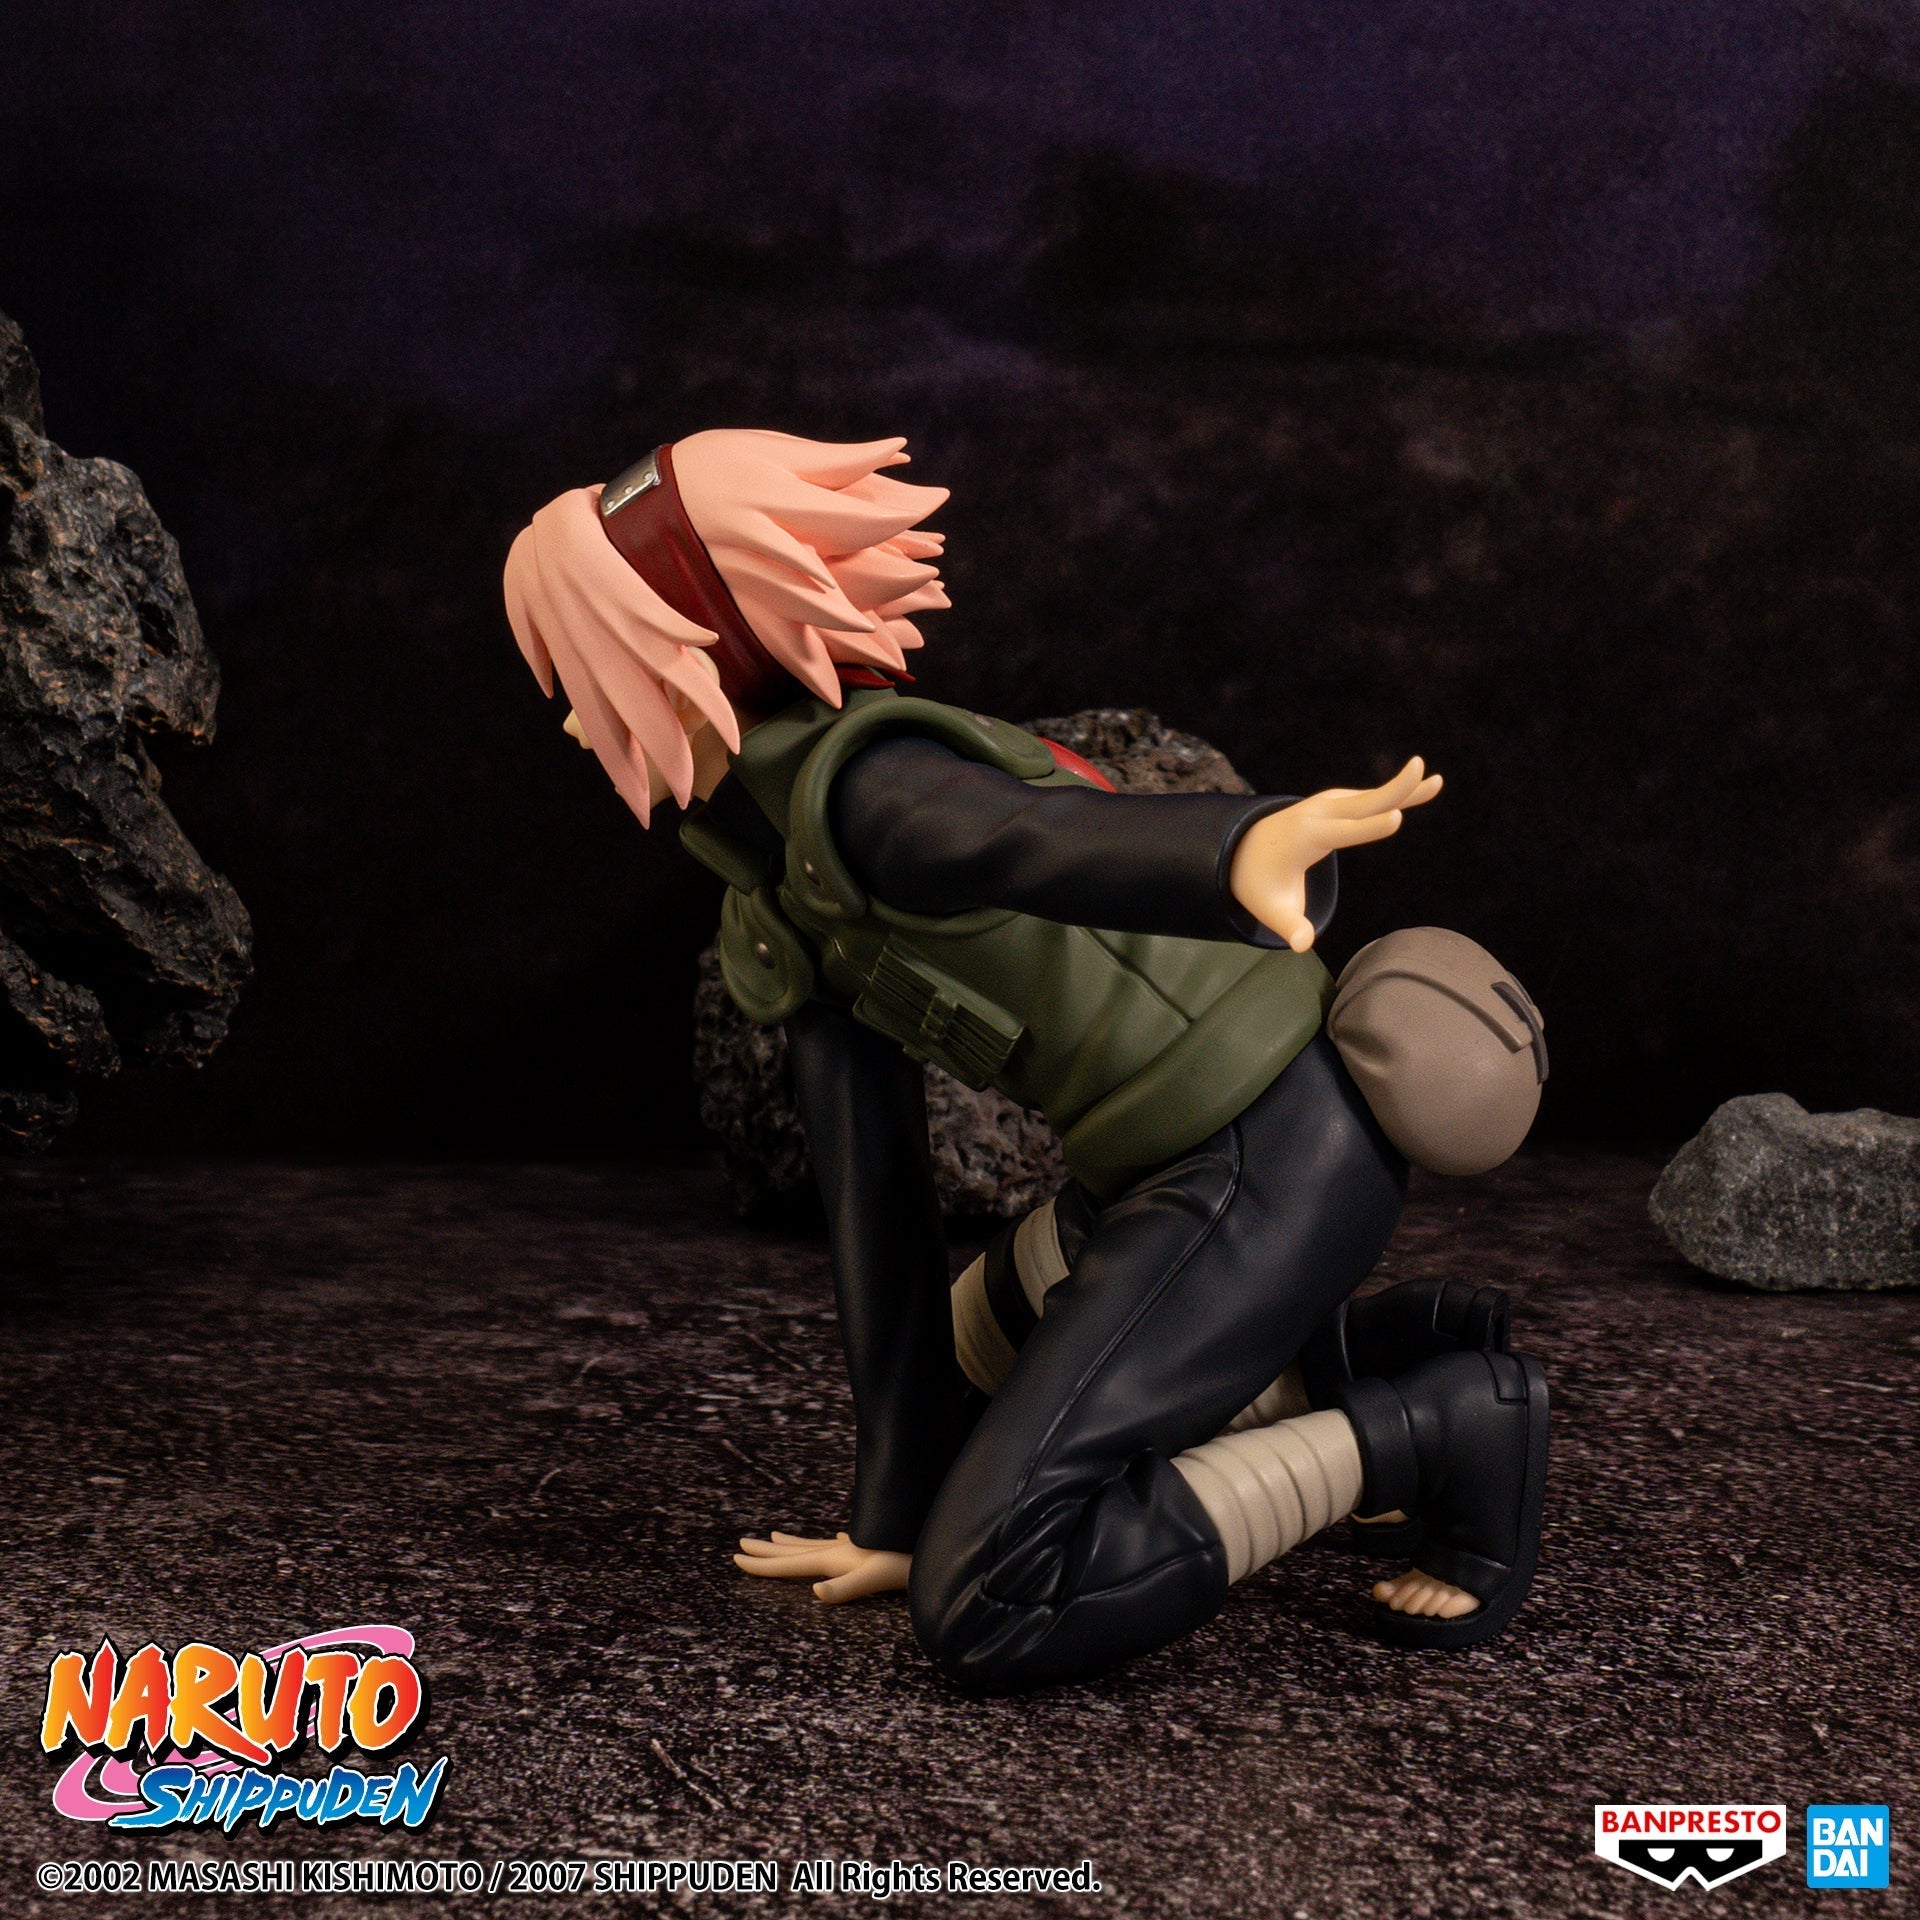 Naruto Shippuden - Haruno Sakura Panel Spectacle Figure image count 5